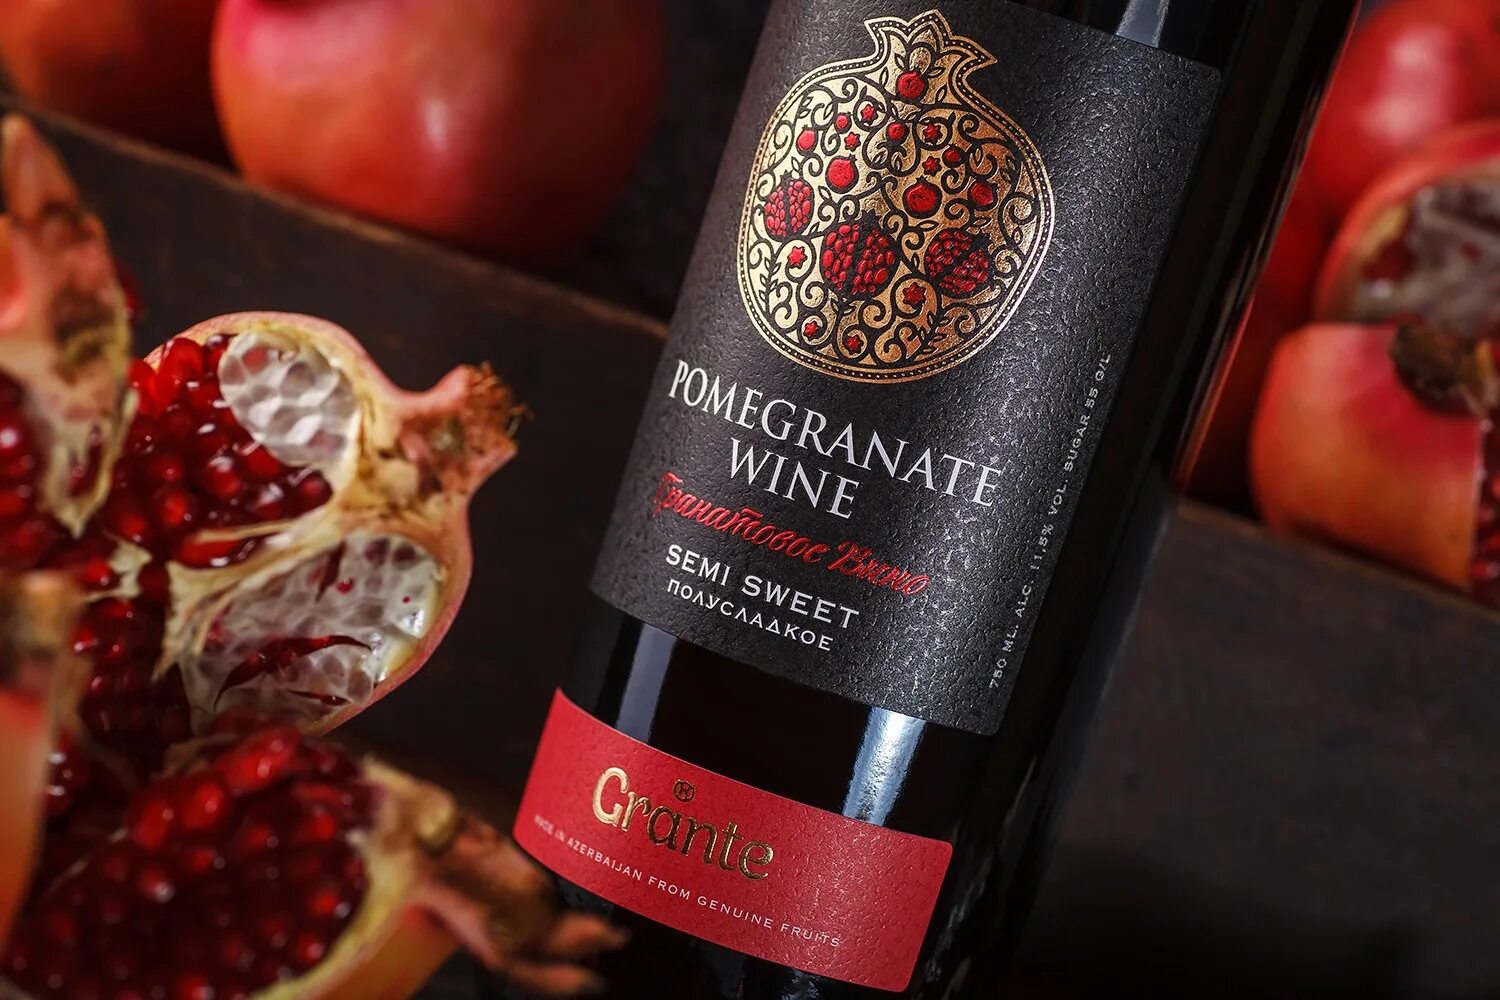 Вино Pomegranate Wine. Вино Помегранате Гранатовое. Красное и белое Гранатовое вино Азербайджан. Гранатовое вино Роме гранат. Иранское вино купить